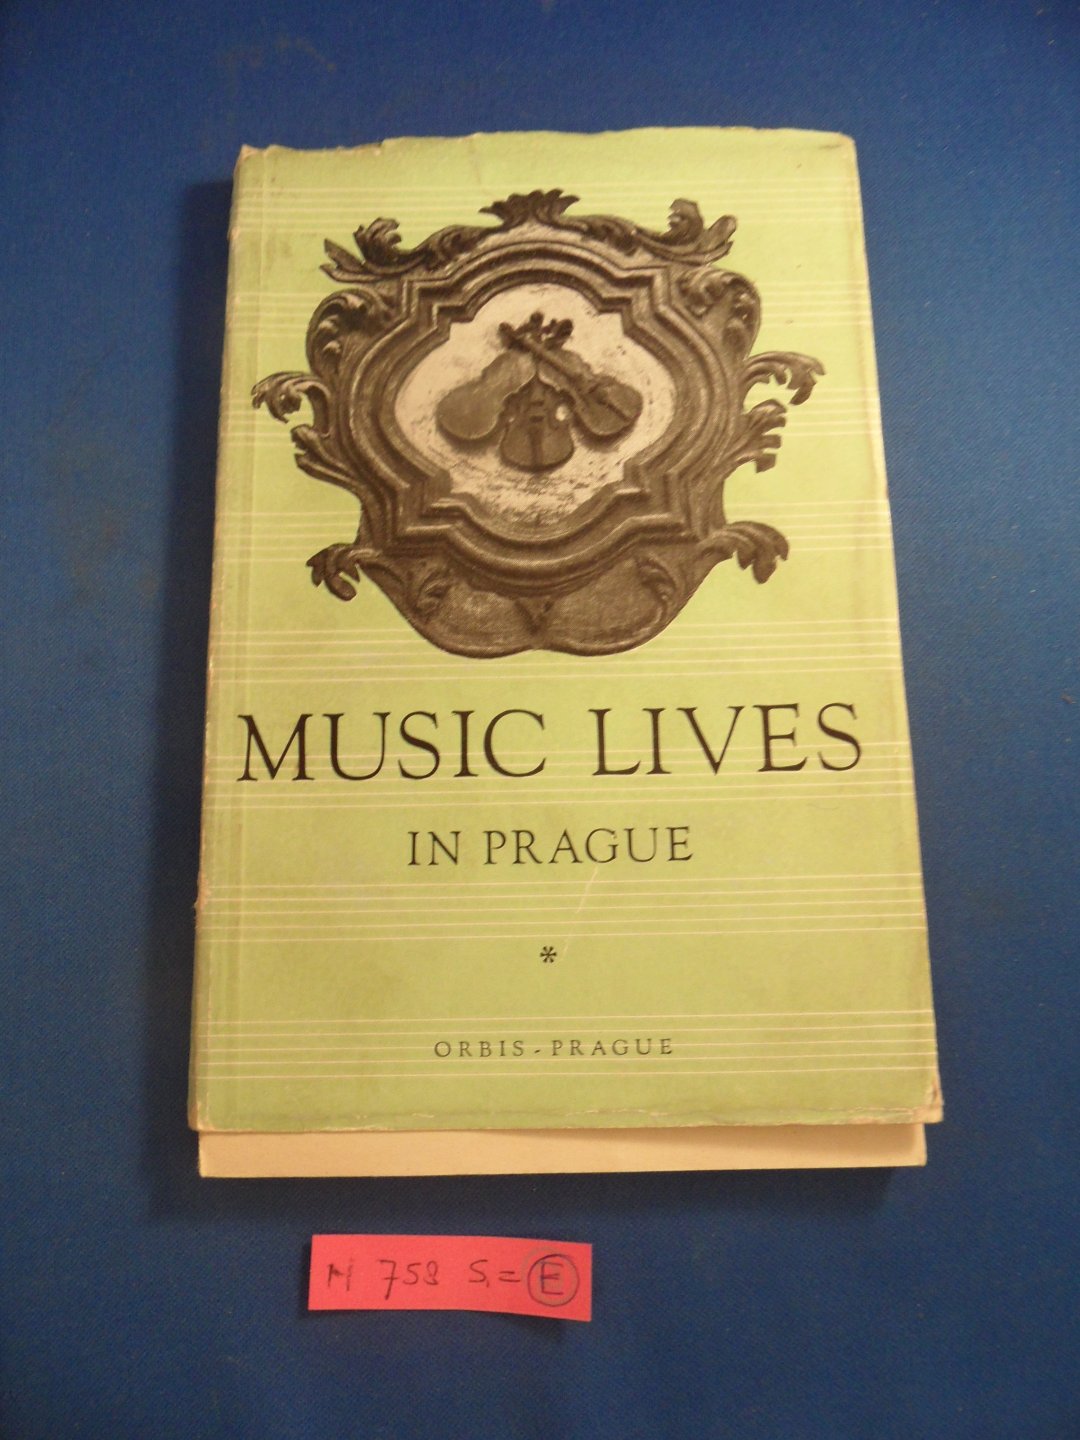  - Music lives in Prague. Walk through the city